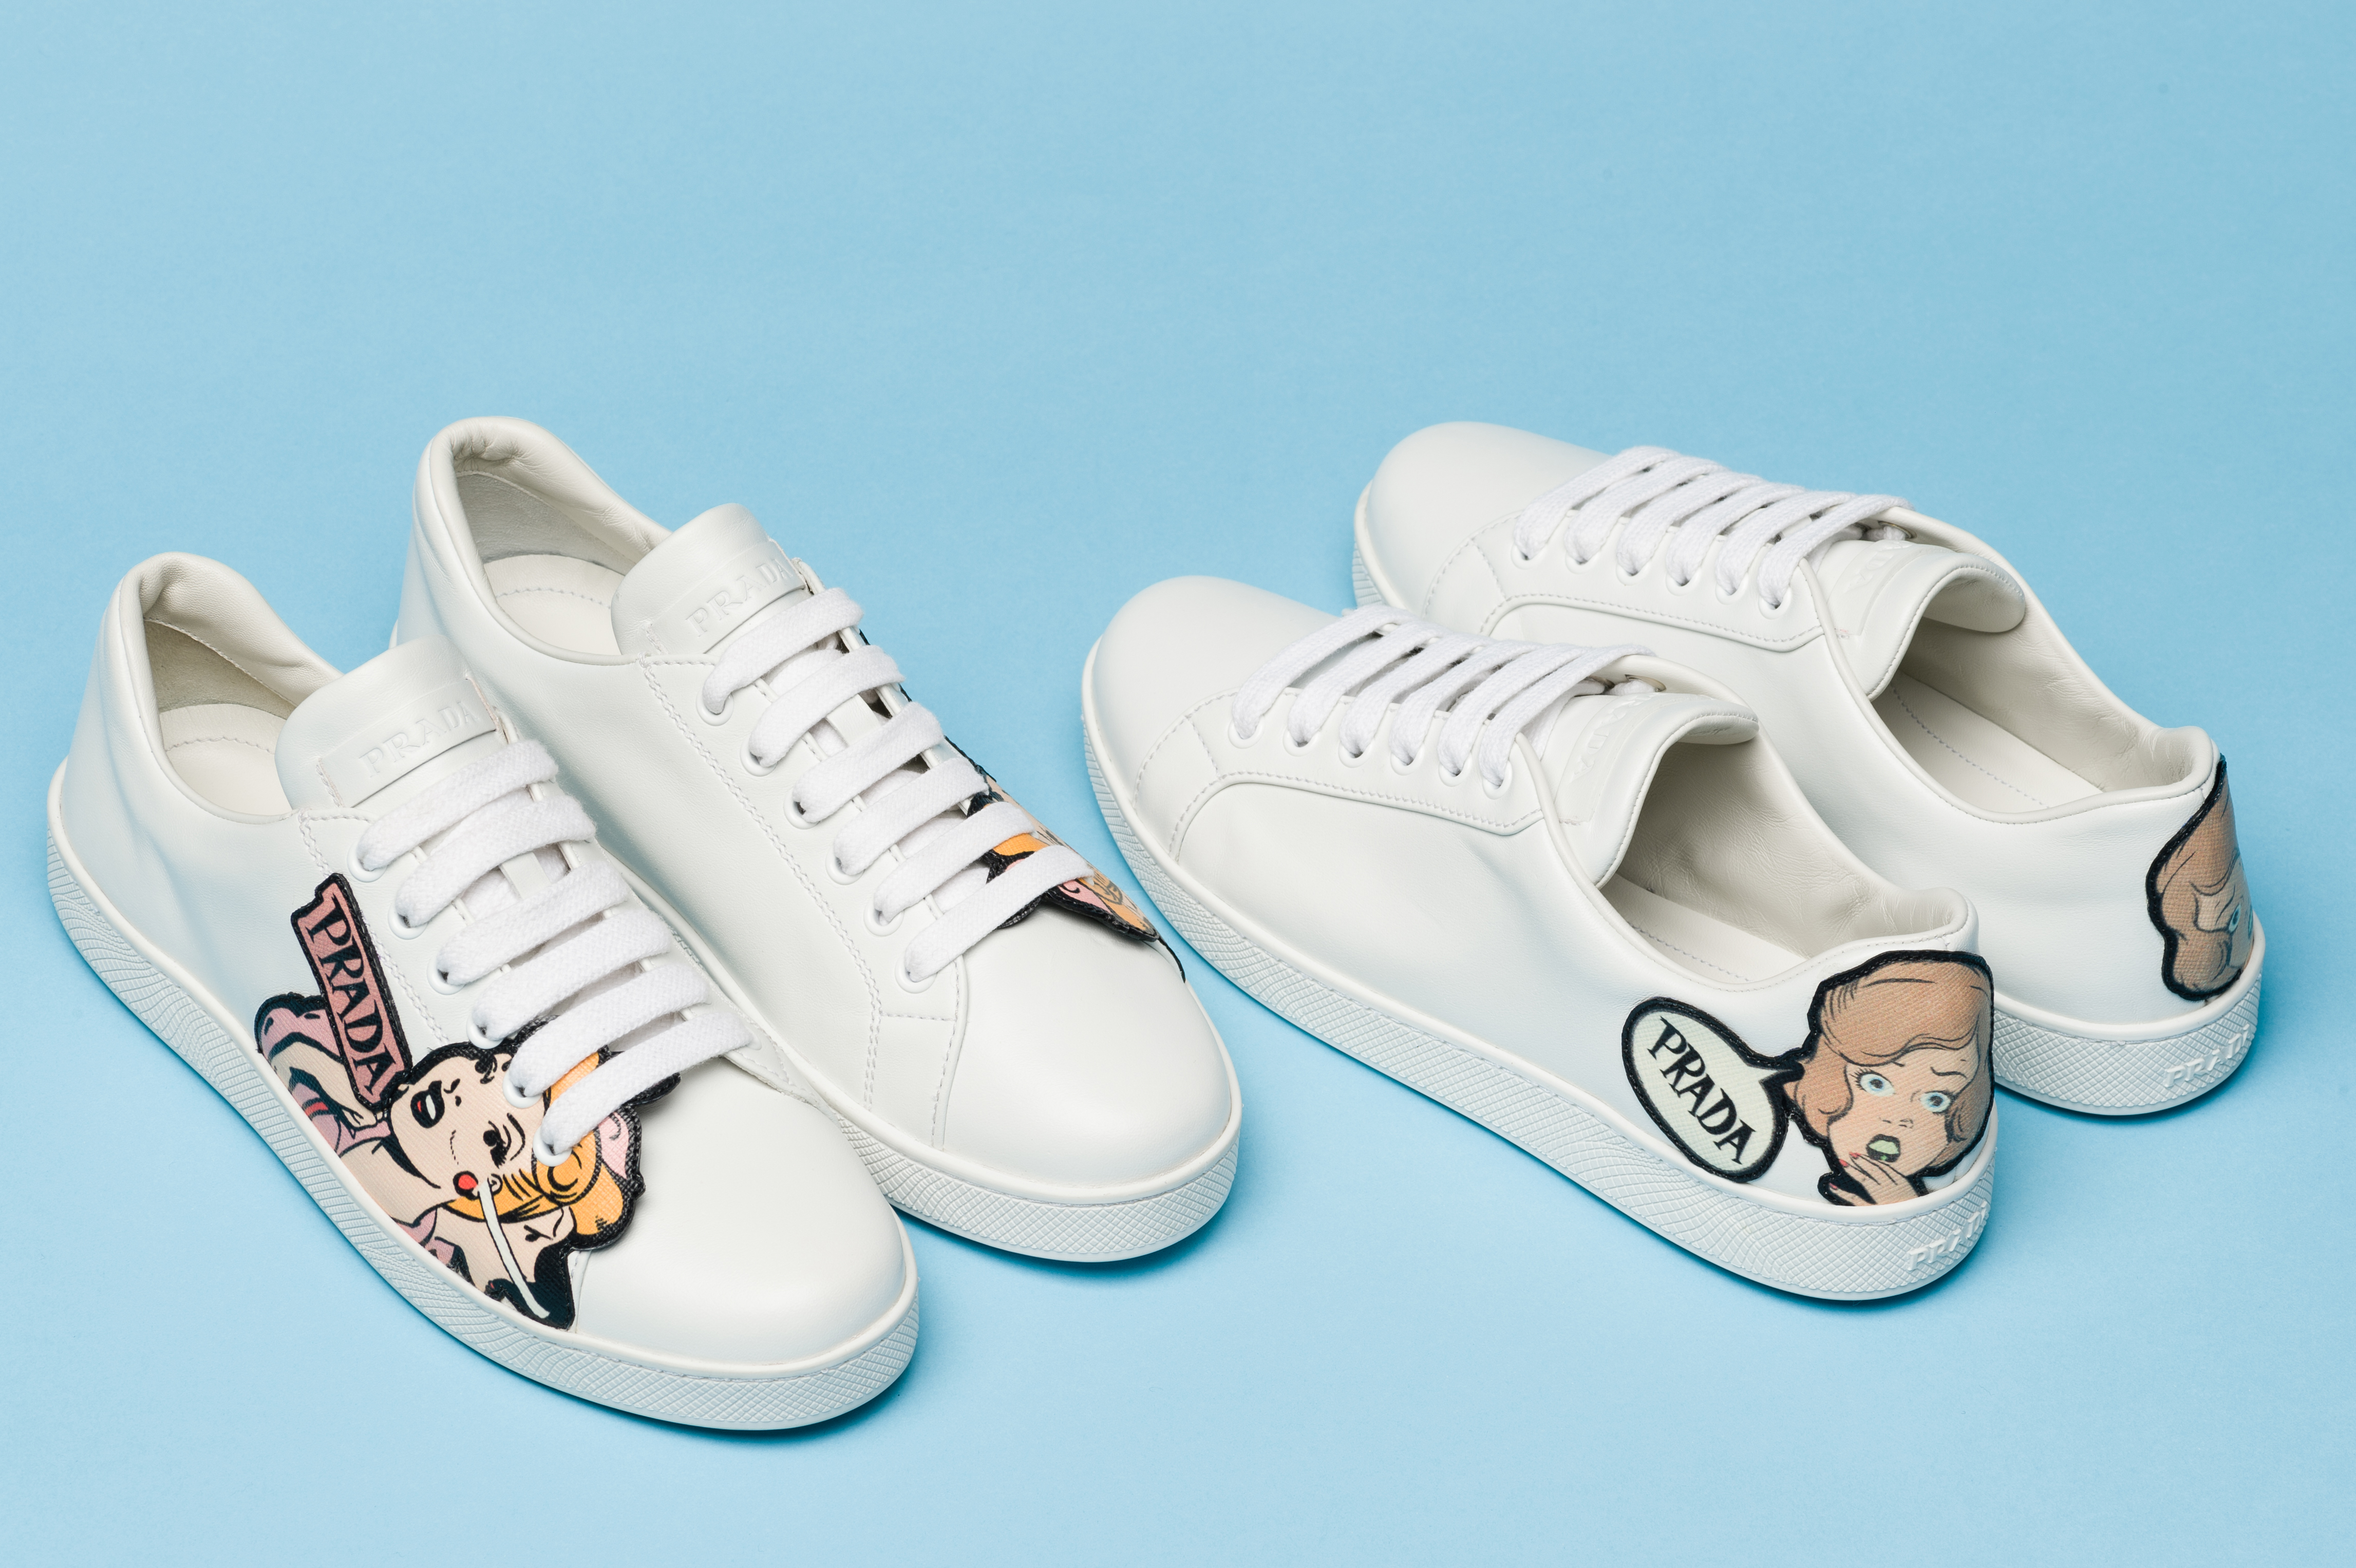 Prada's New Comic Sneakers | Sandra's 